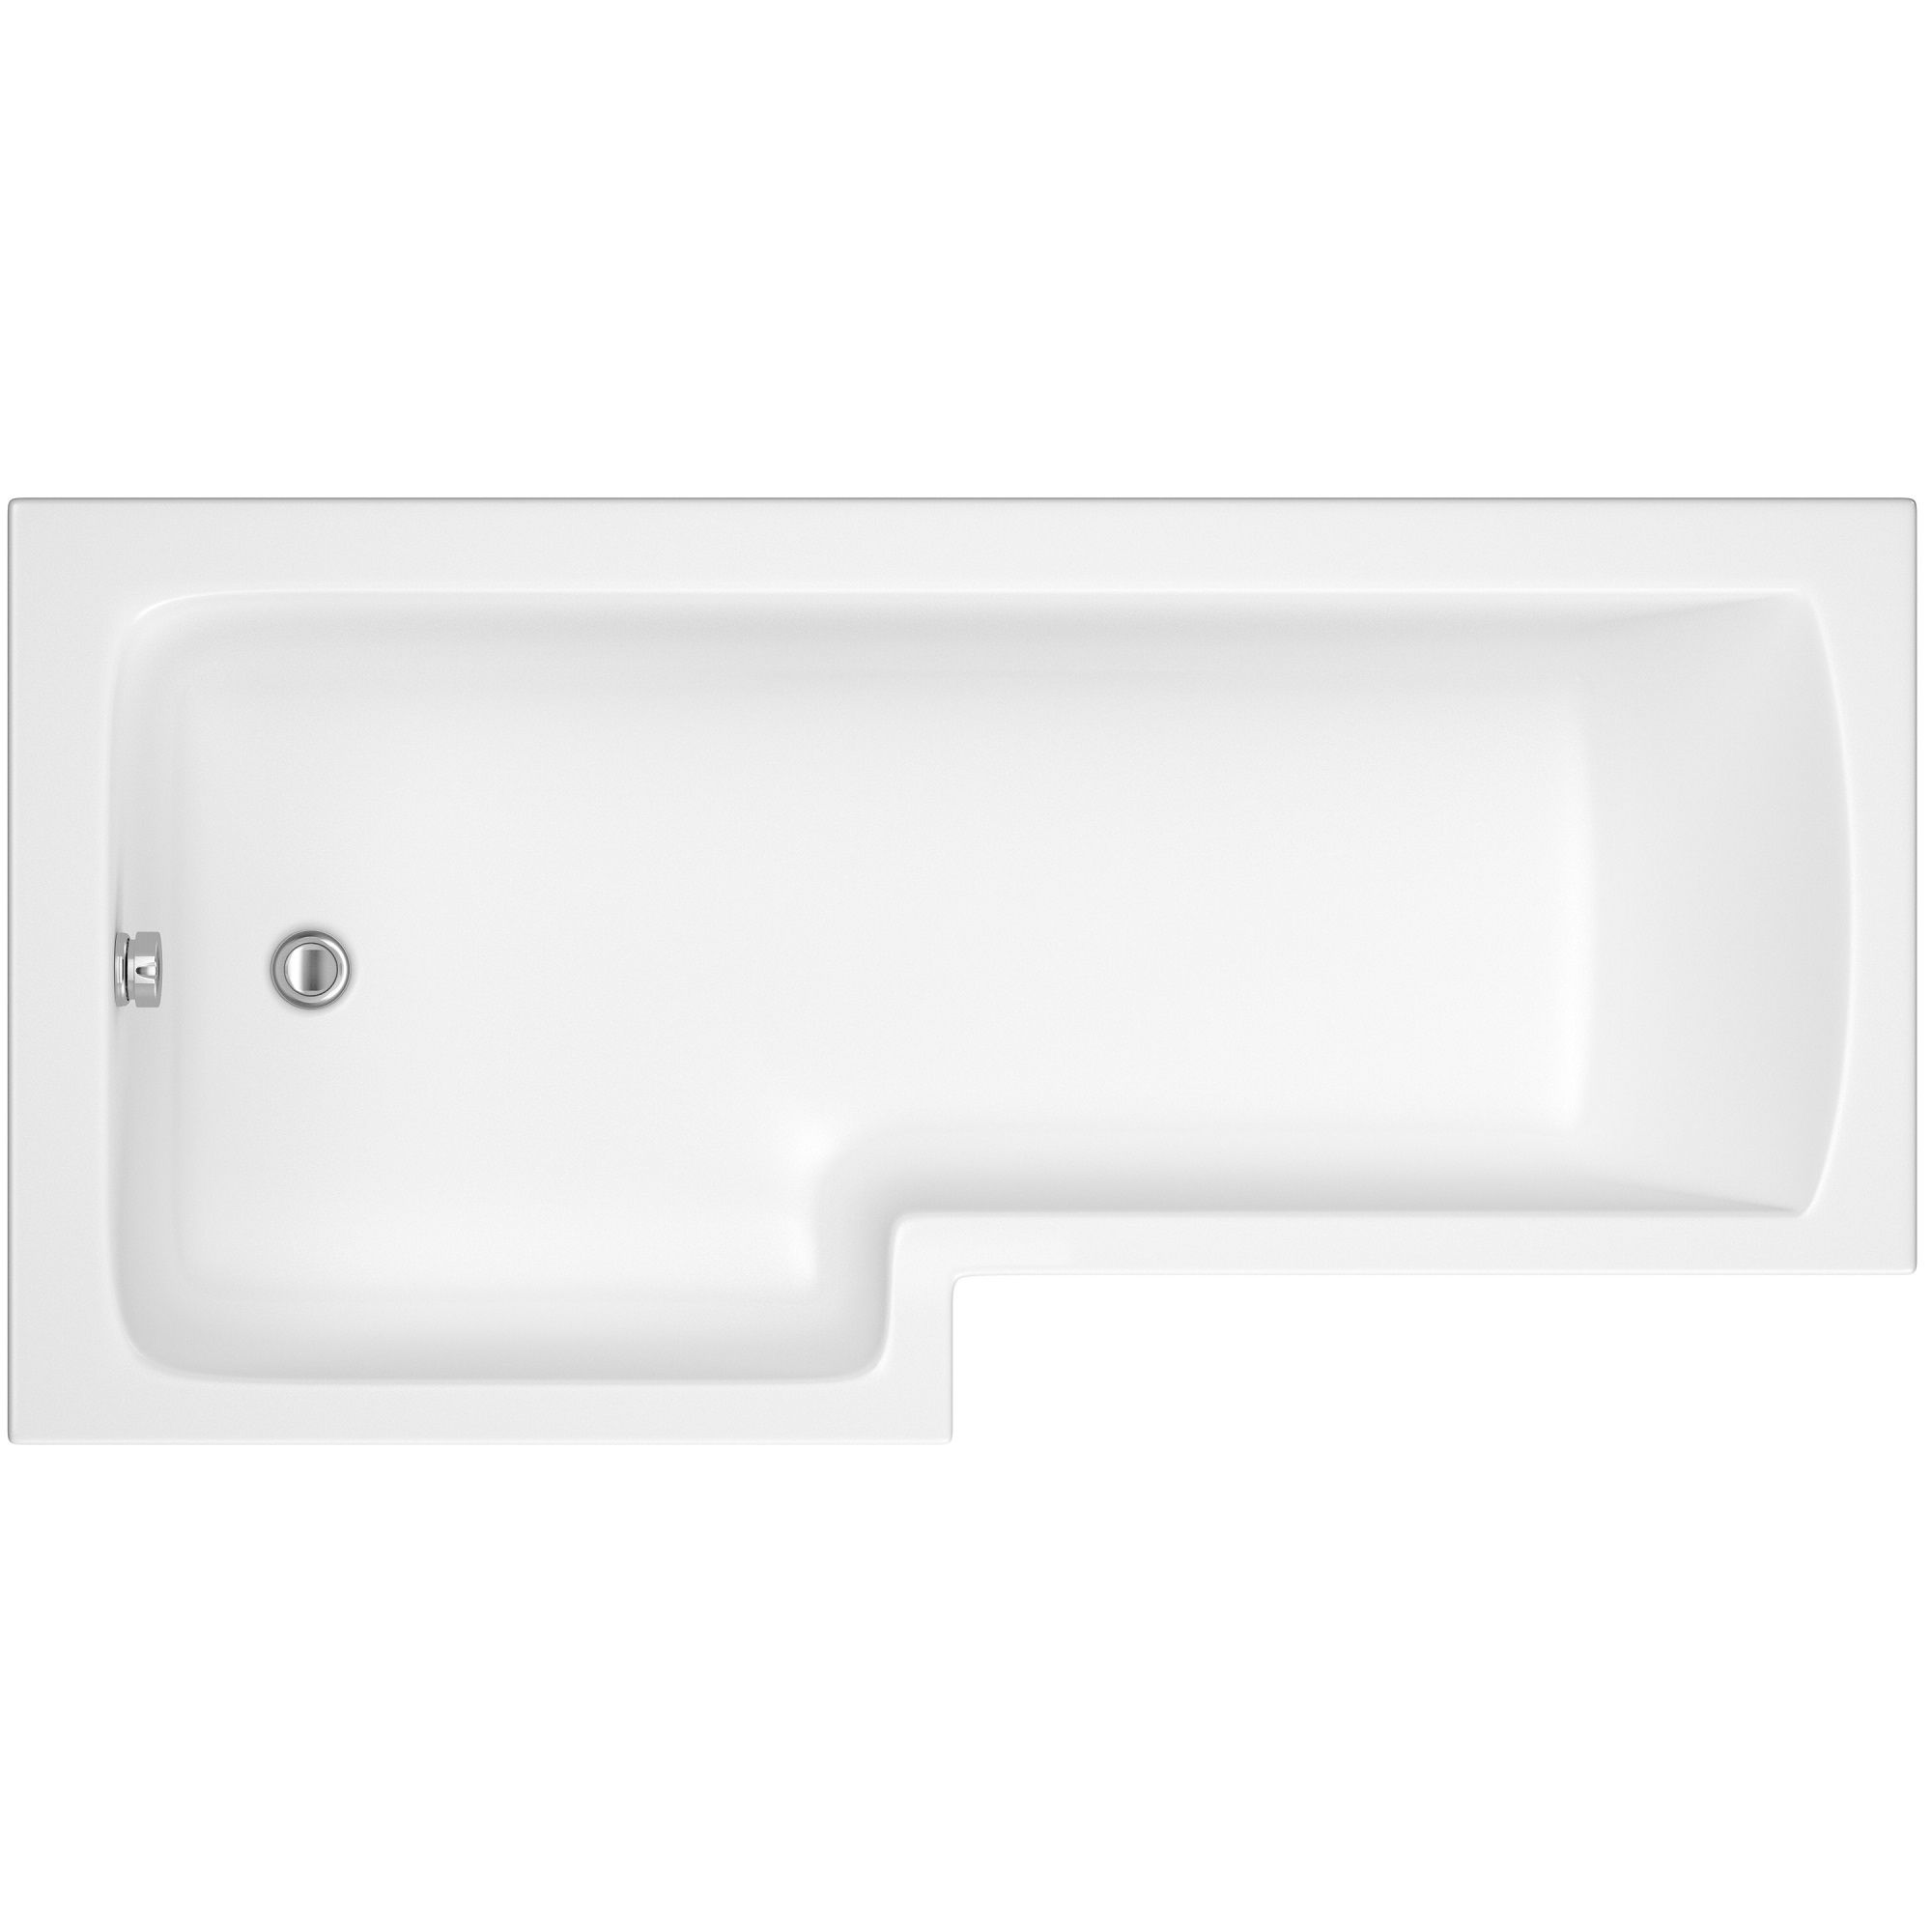 Cooke & Lewis Solarna White L-shaped Left-handed Shower Bath, panel & screen set (L)1700mm